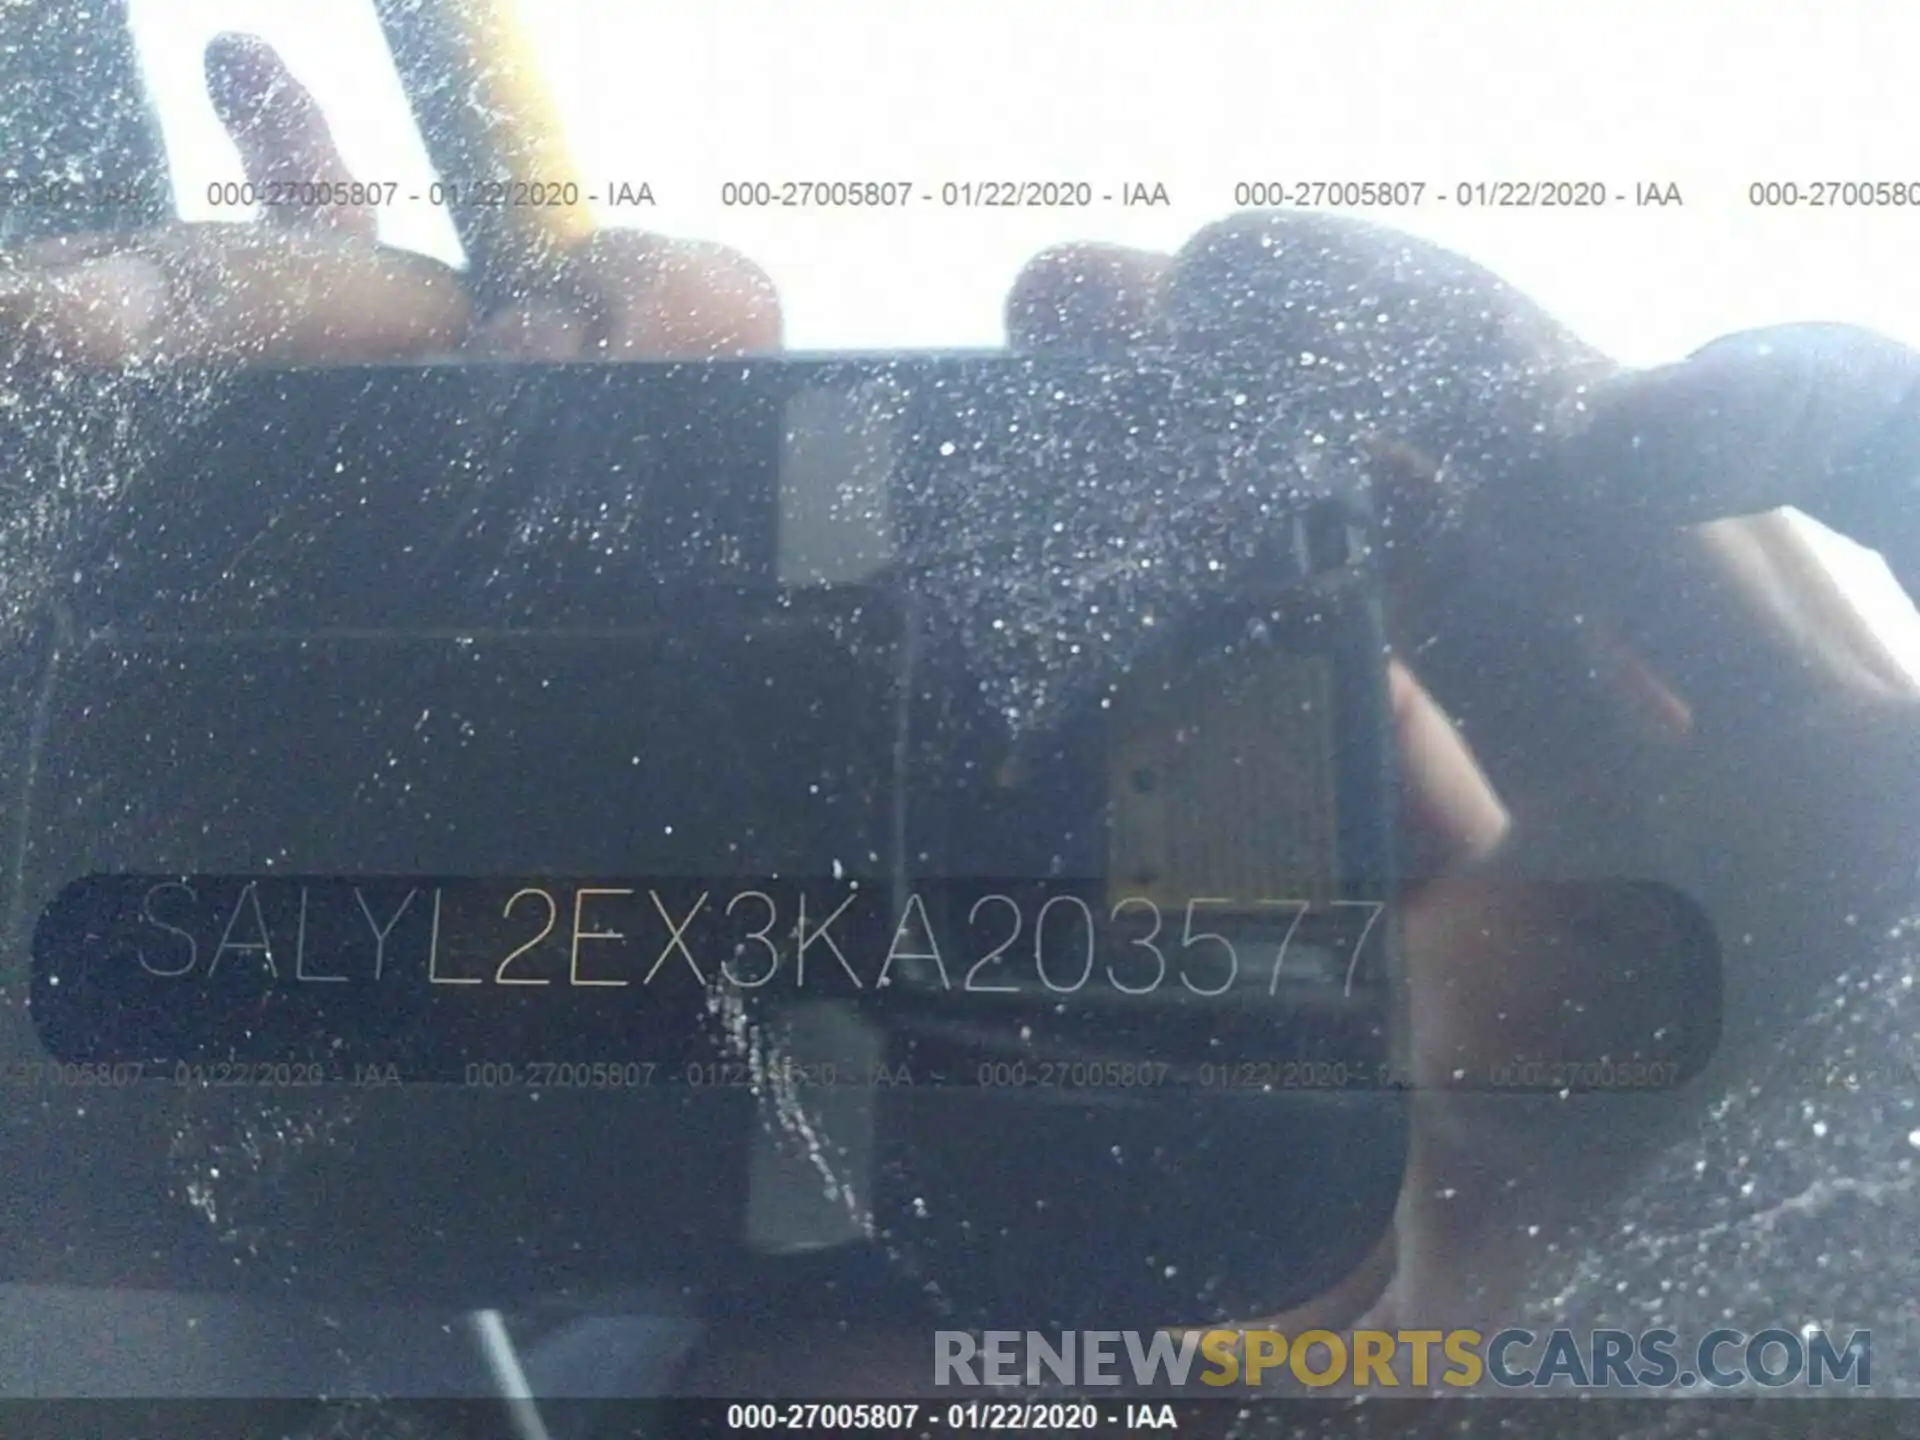 9 Photograph of a damaged car SALYL2EX3KA203577 LAND ROVER RANGE ROVER VELAR 2019